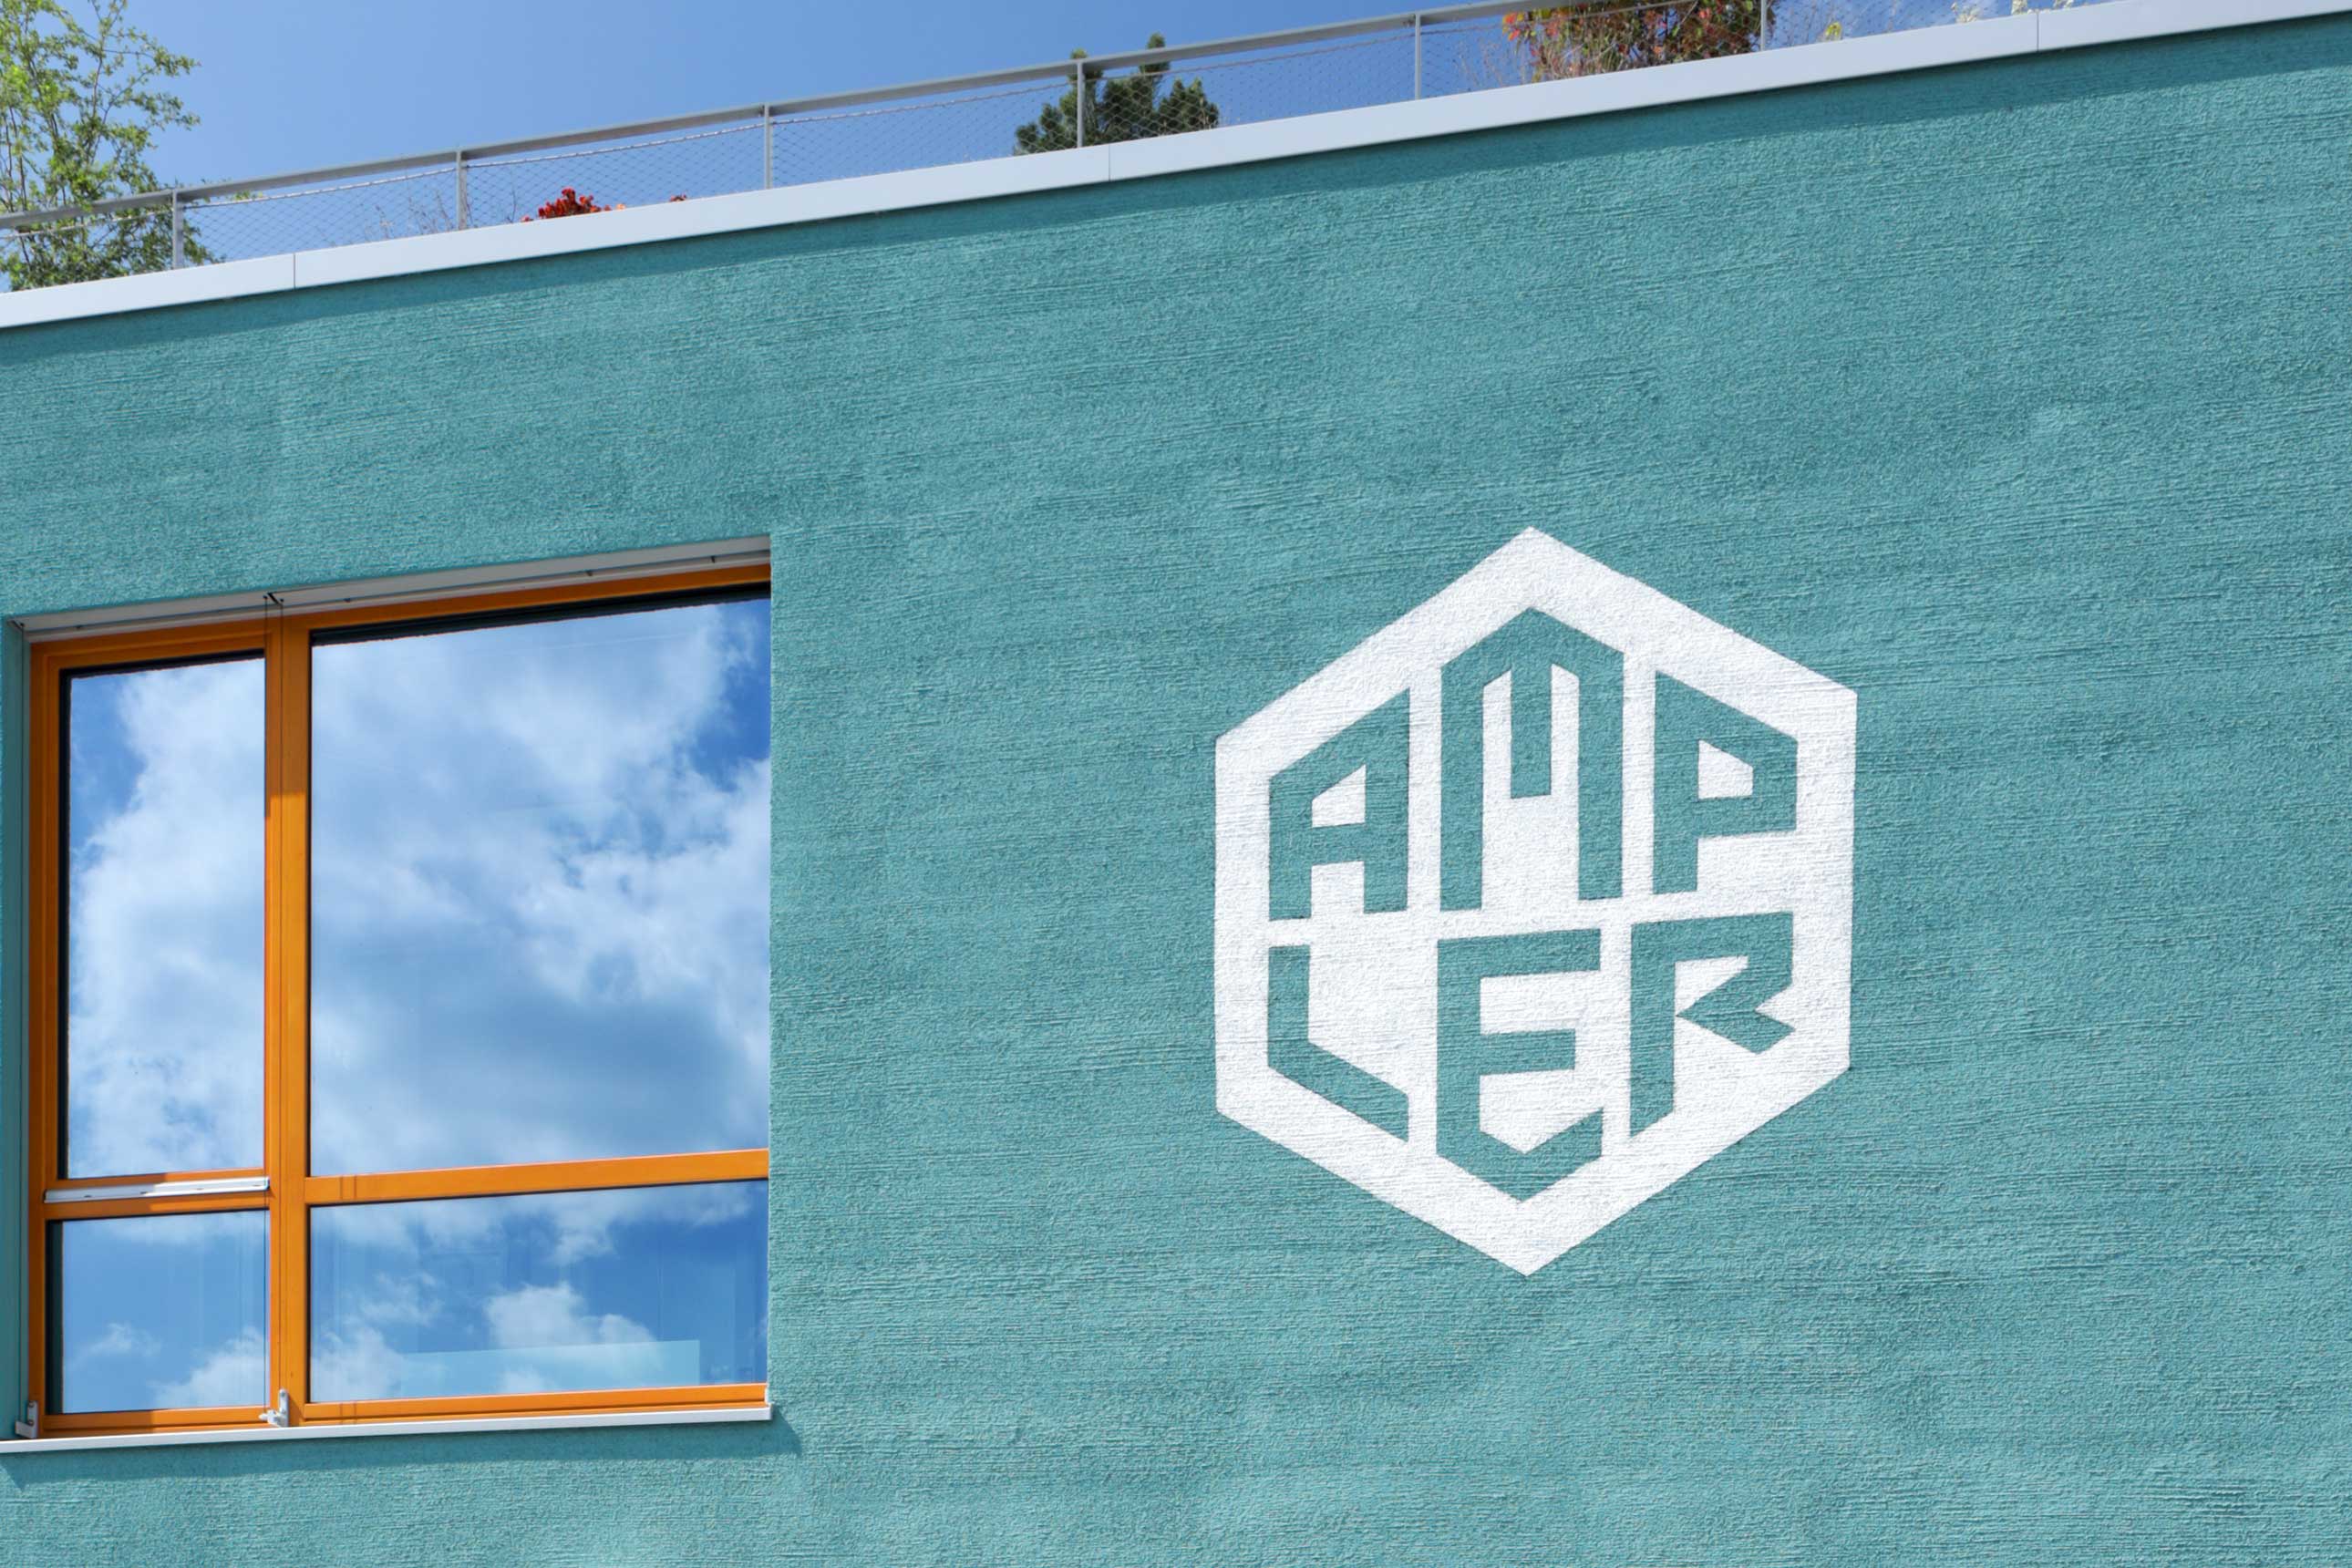 Ampler Berlin-Schoeneberg - Schriftgestaltung, Aussenfassadegestaltung, Logo - Graupalette